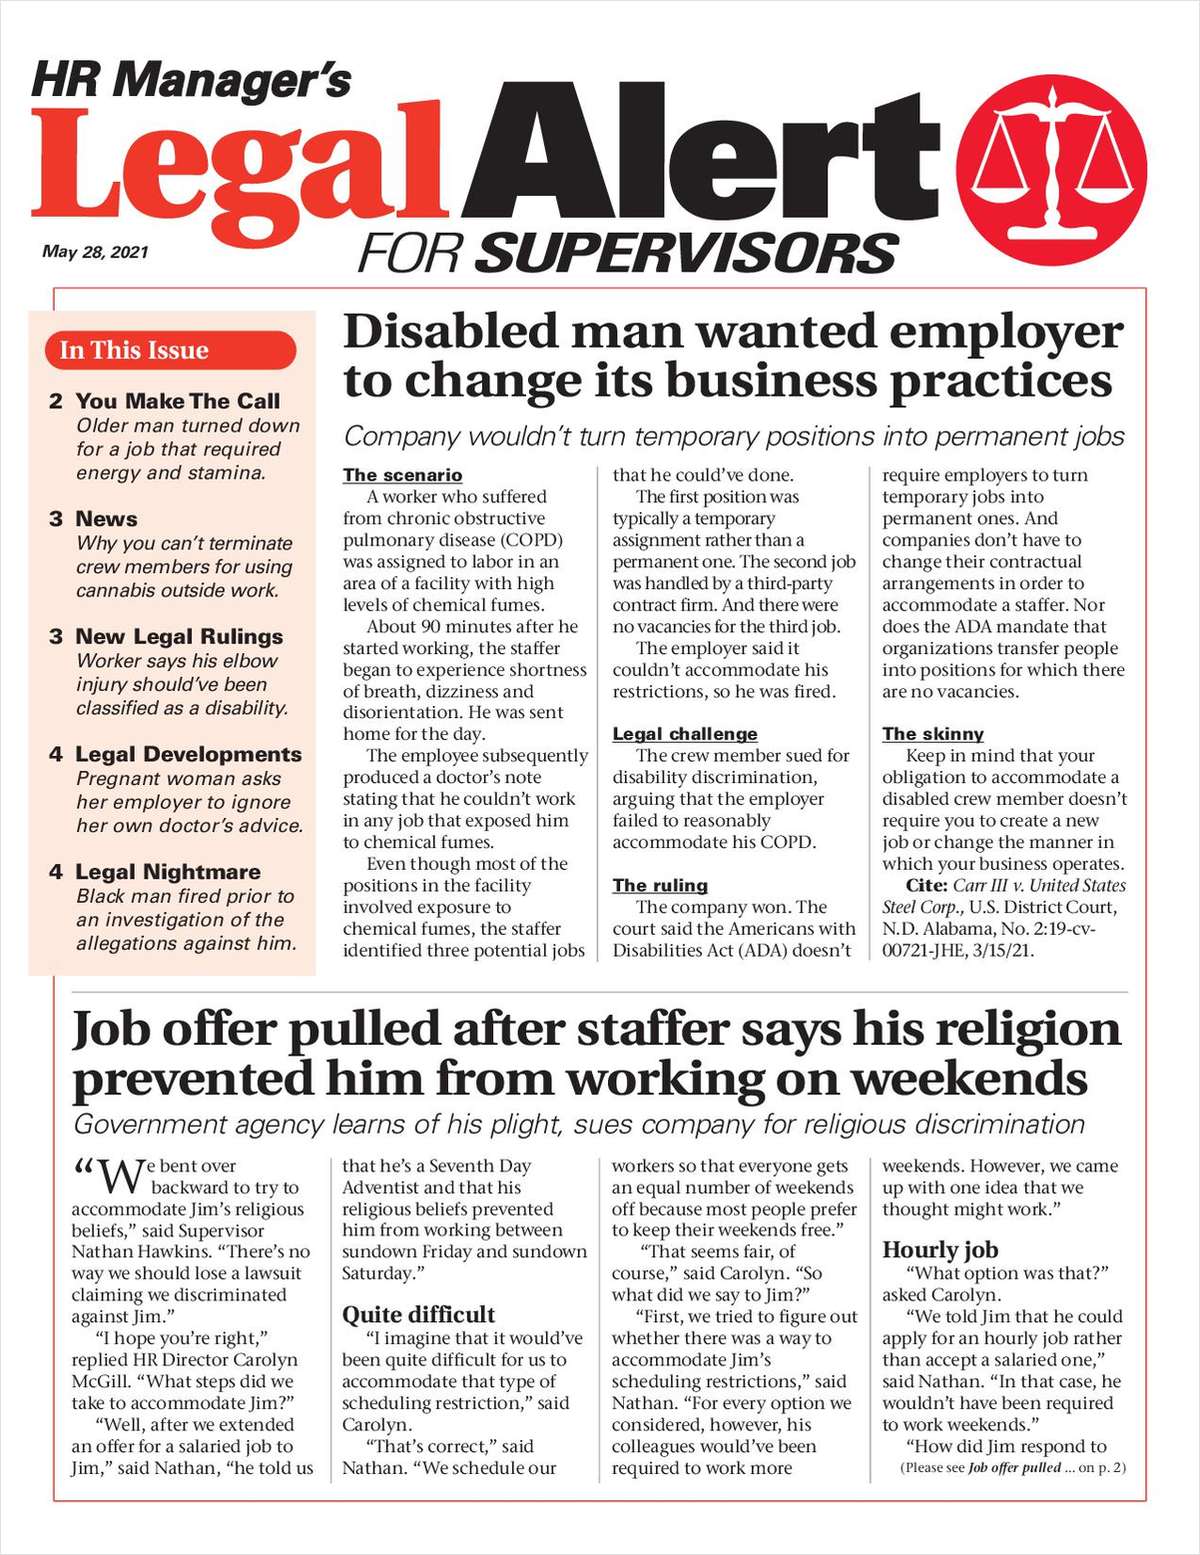 HR Manager's Legal Alert for Supervisors Newsletter: May 28 Edition